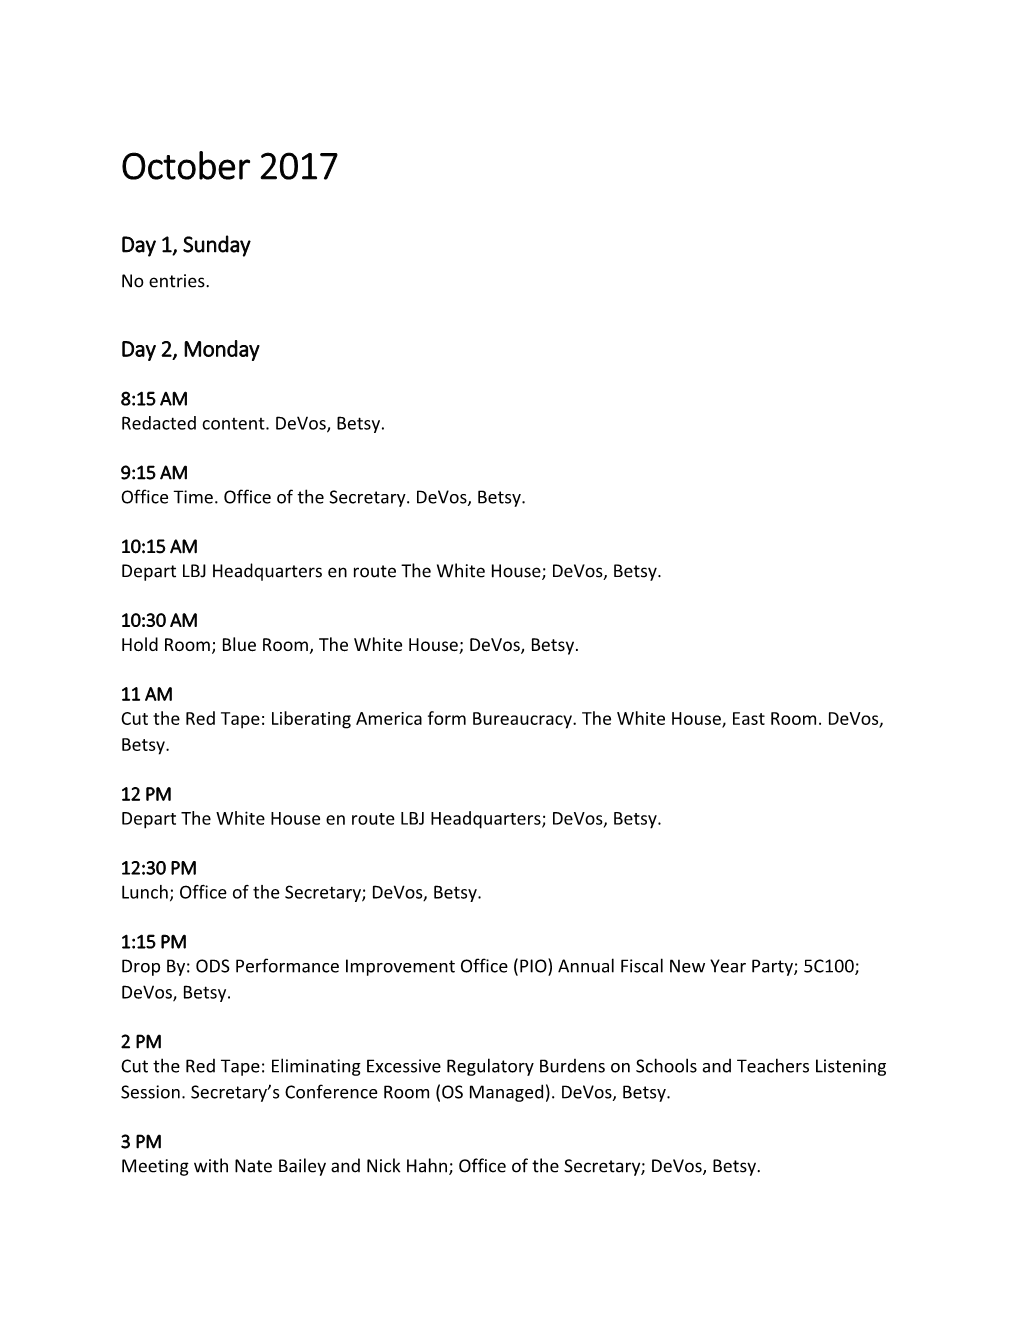 October 2017 - Devos Calendar Redacted (MS Word)